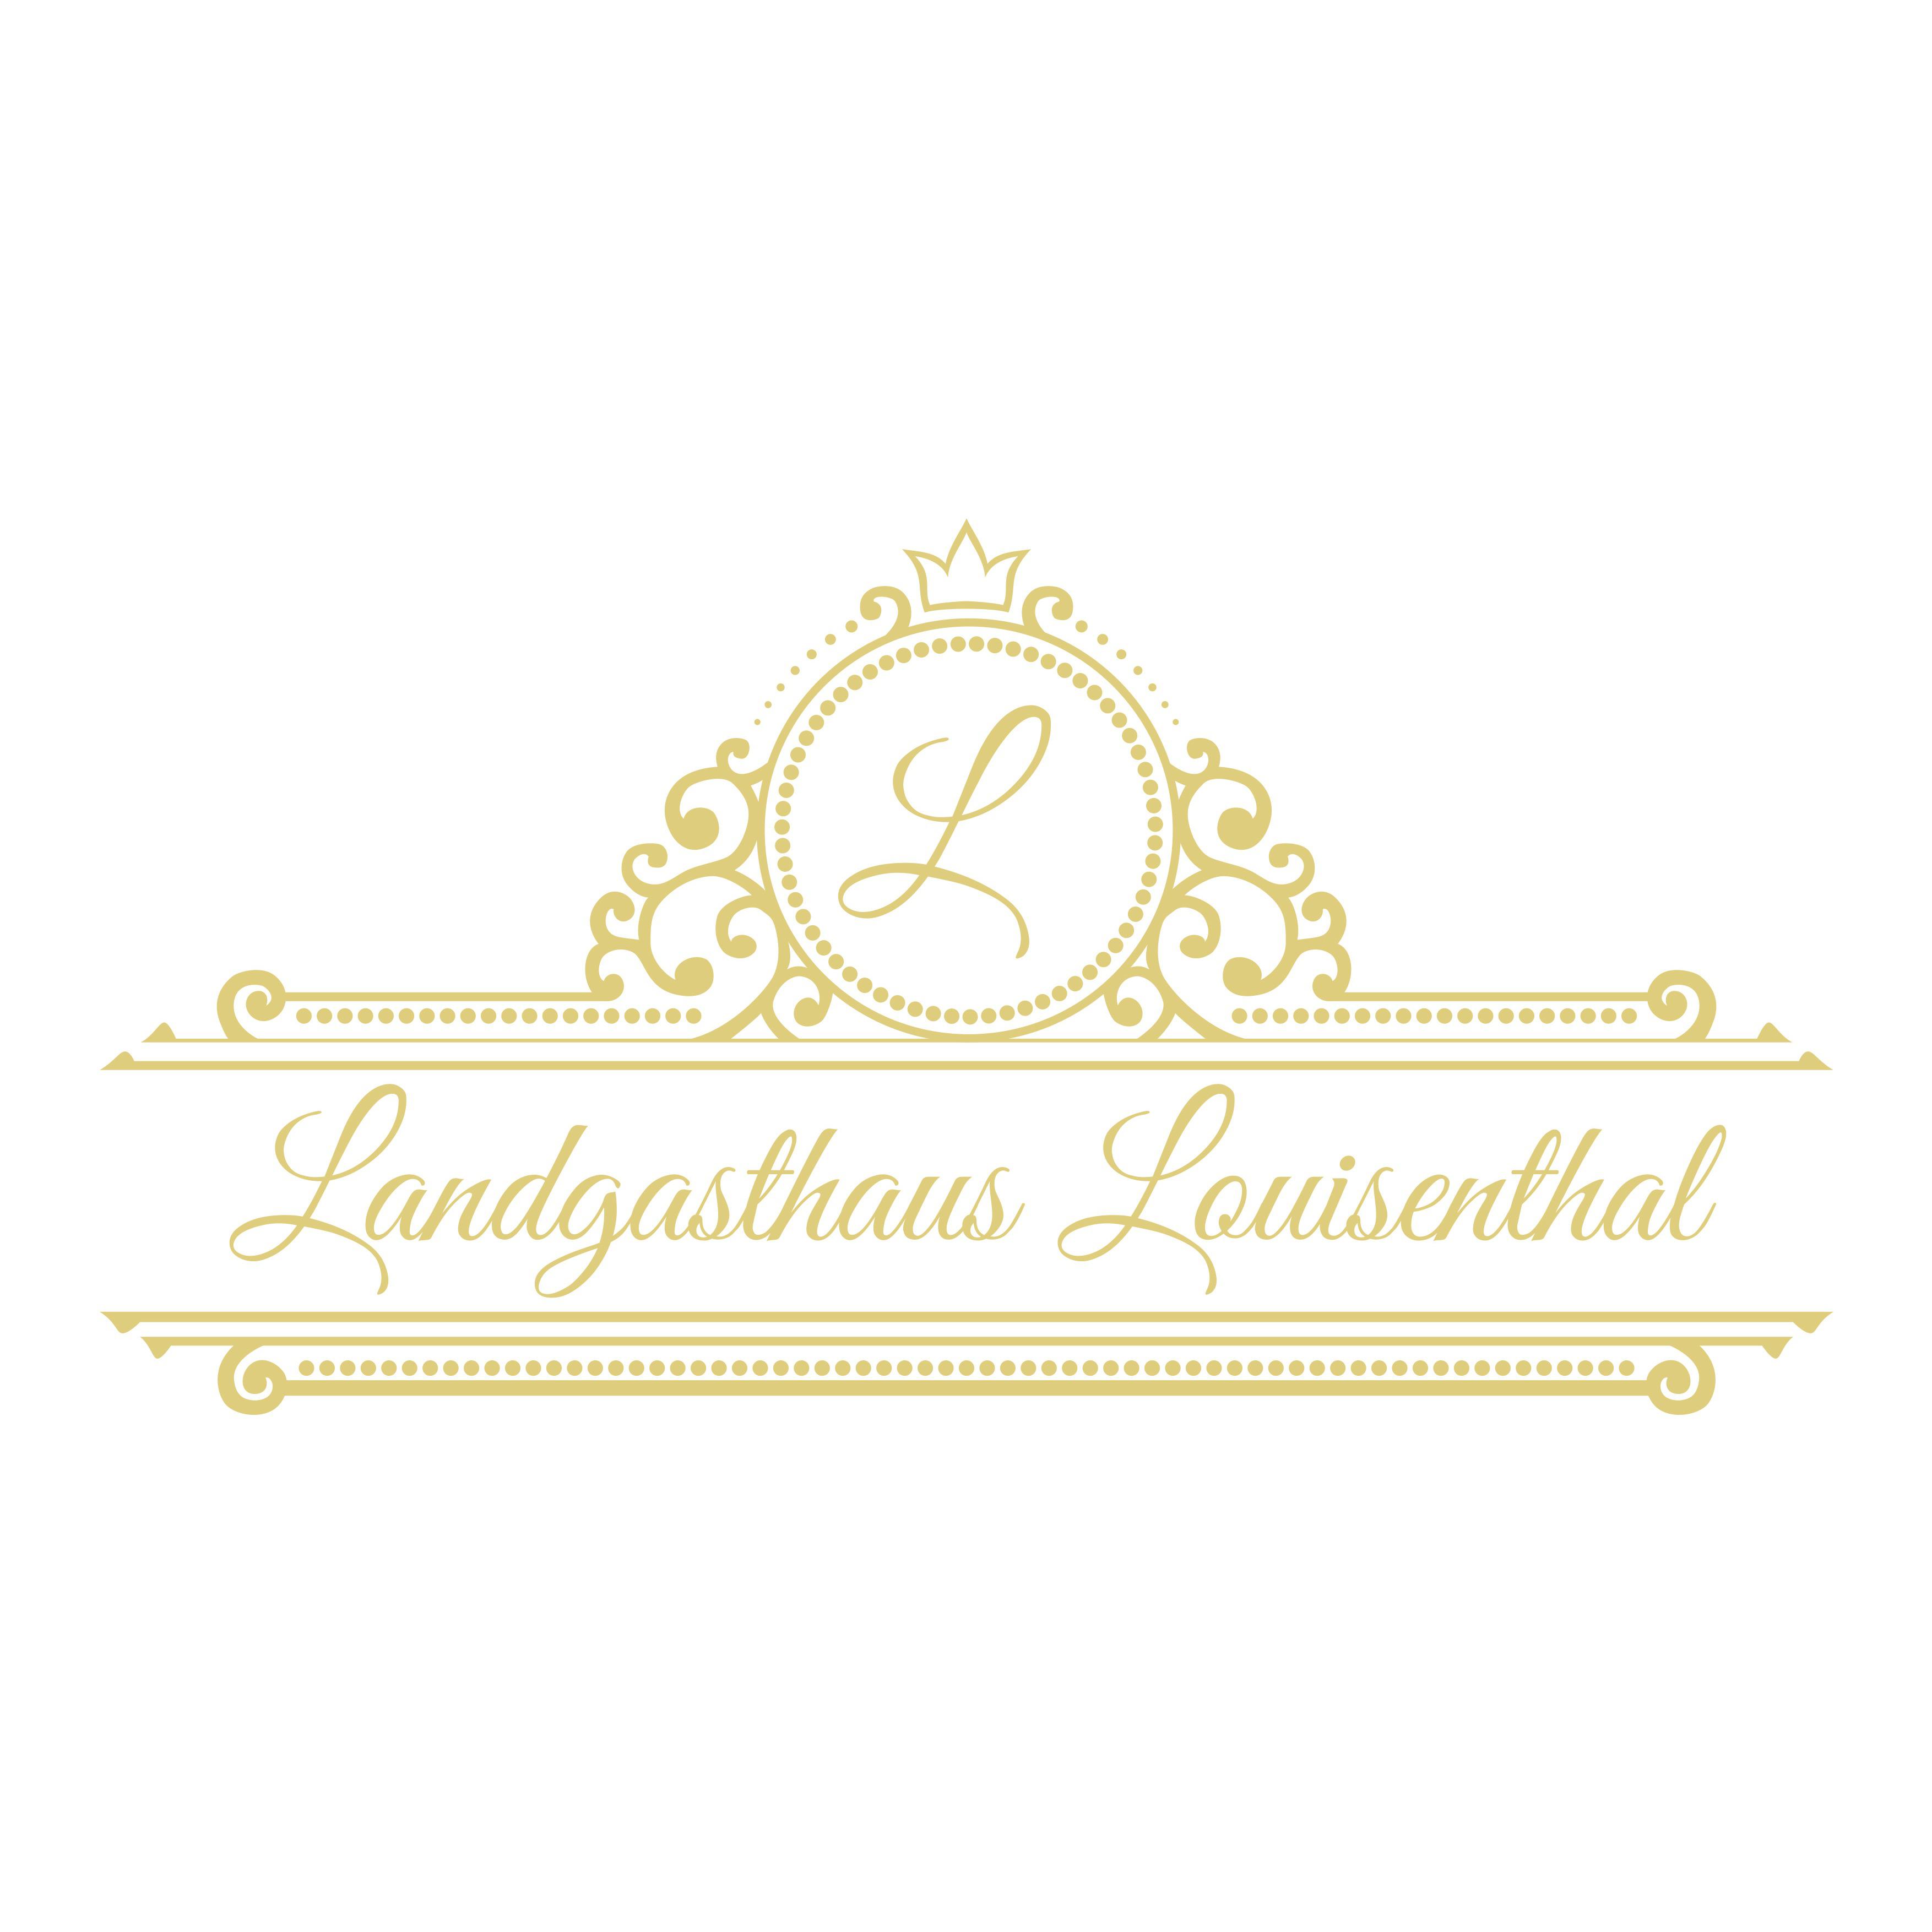 Logo Landgasthaus Louisenthal Inh. Manuel Hoschka